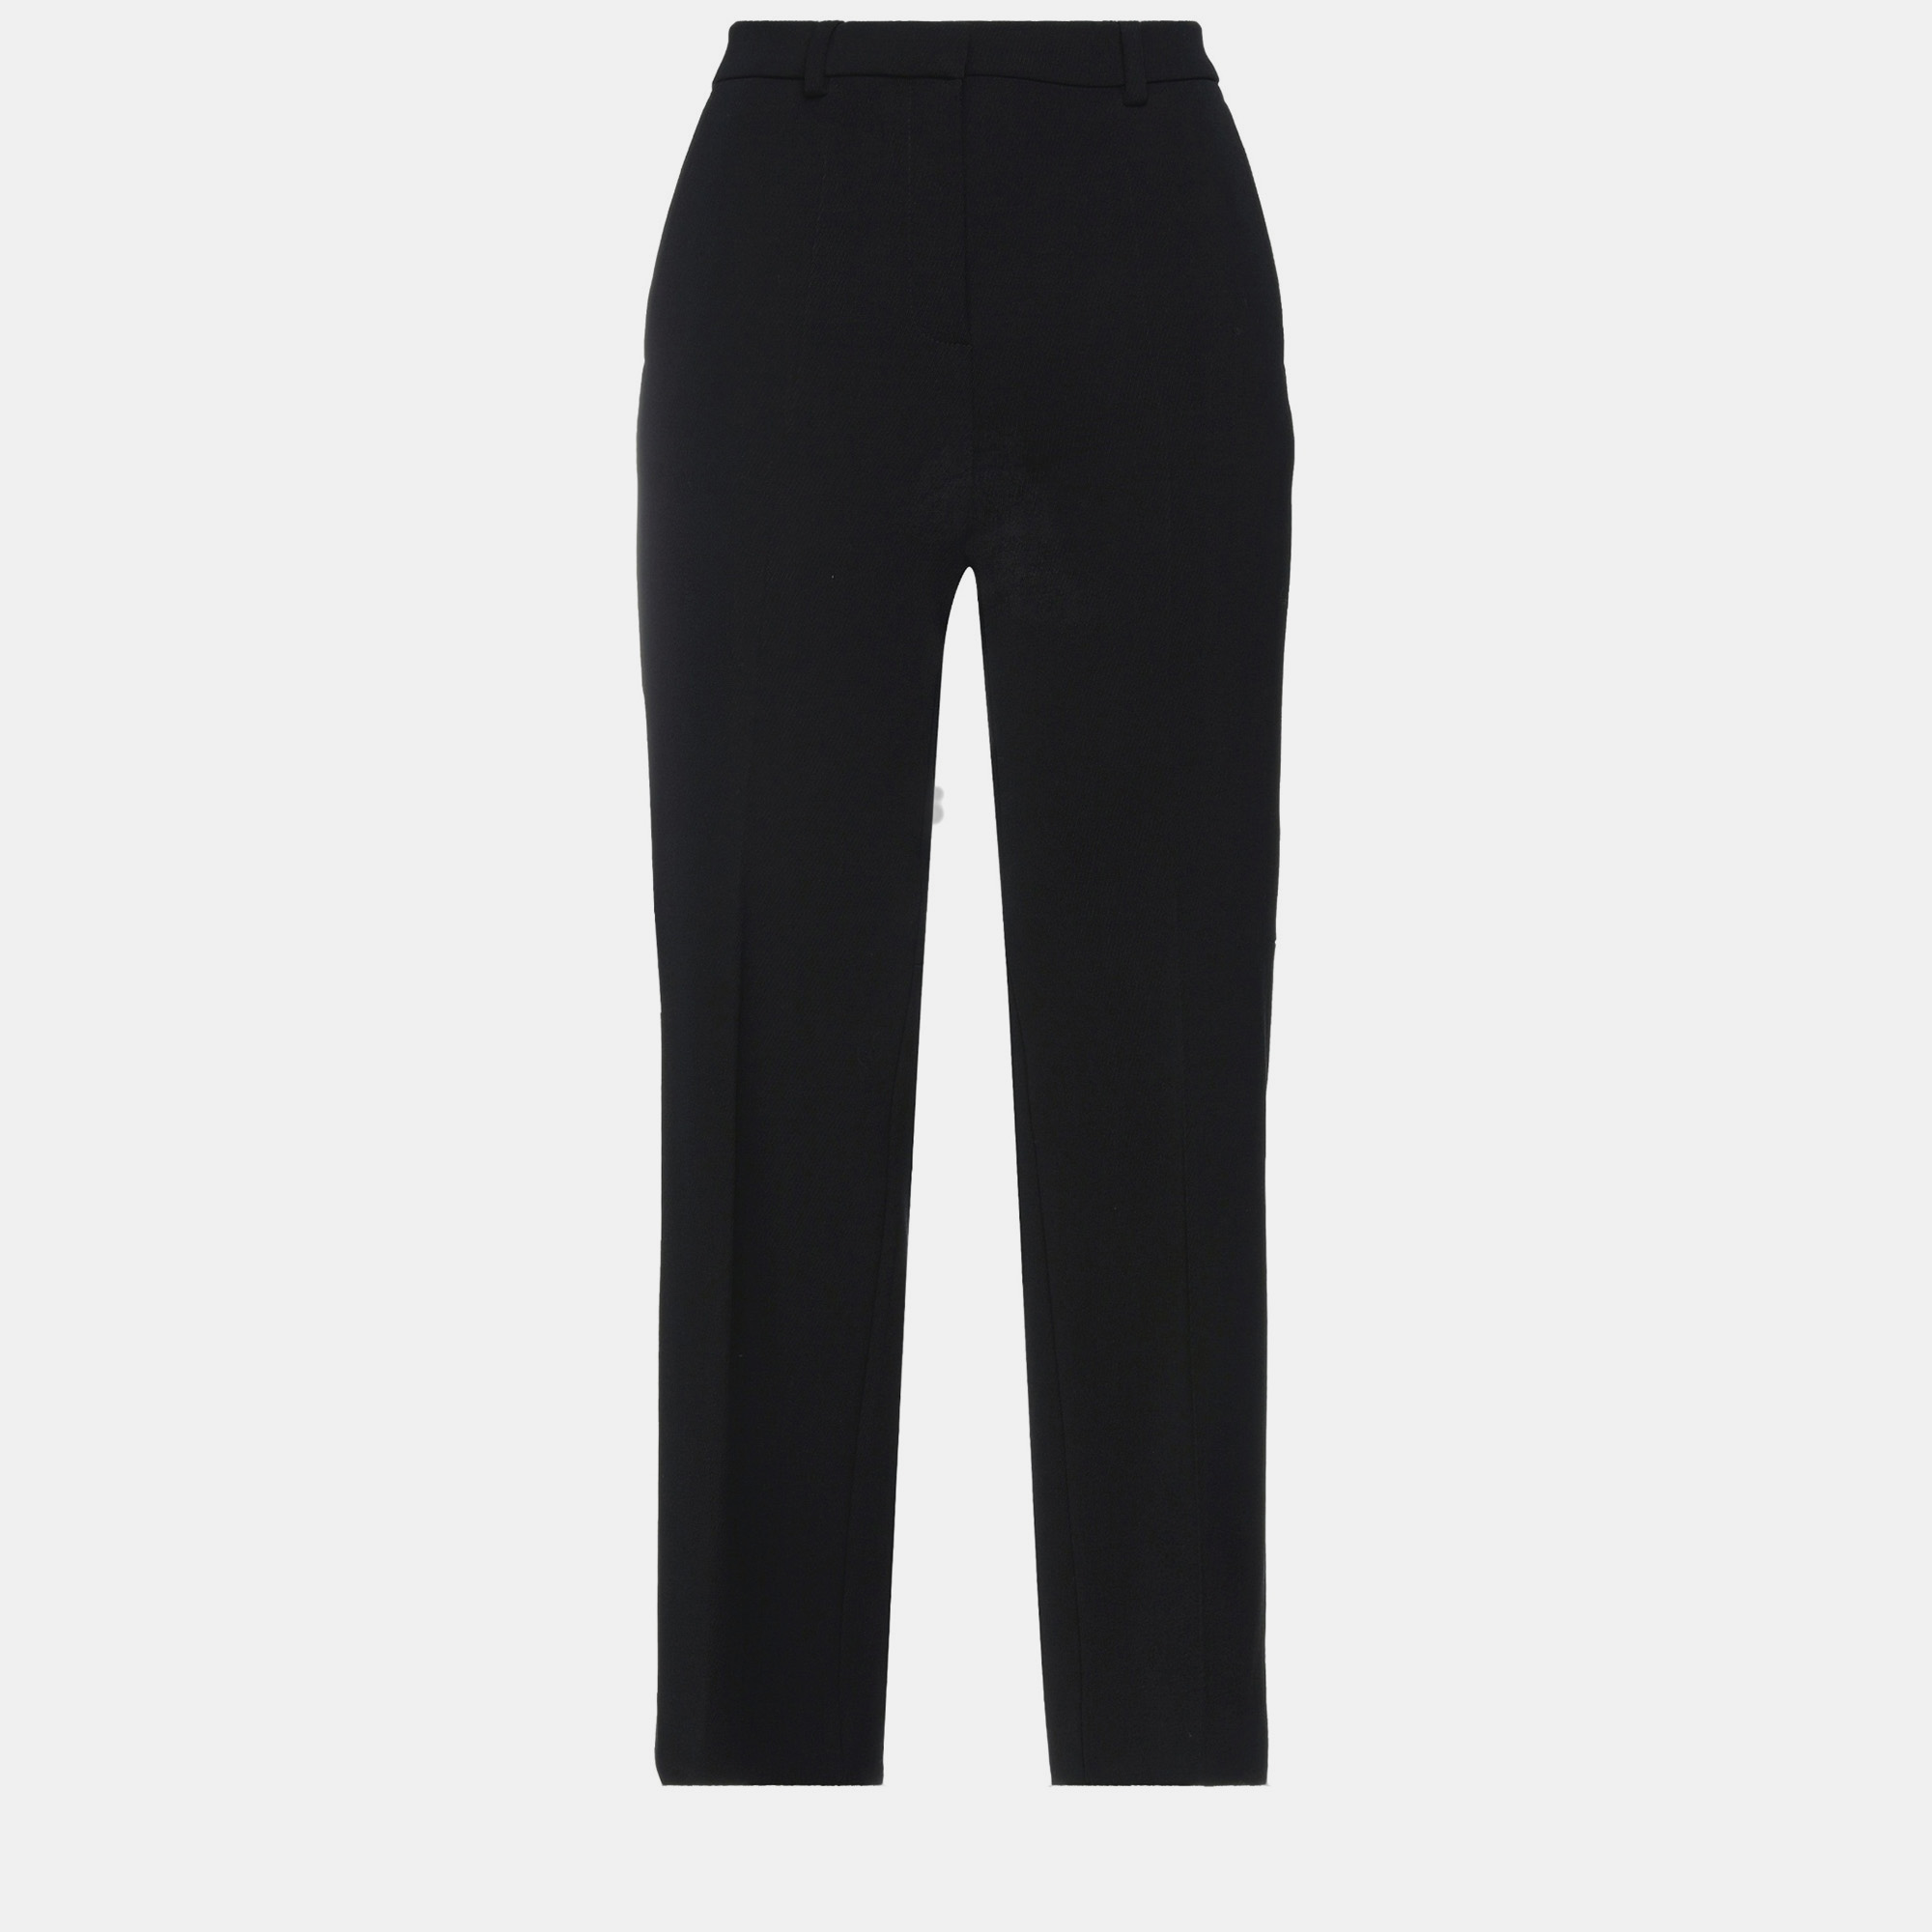 Givenchy polyester pants 40